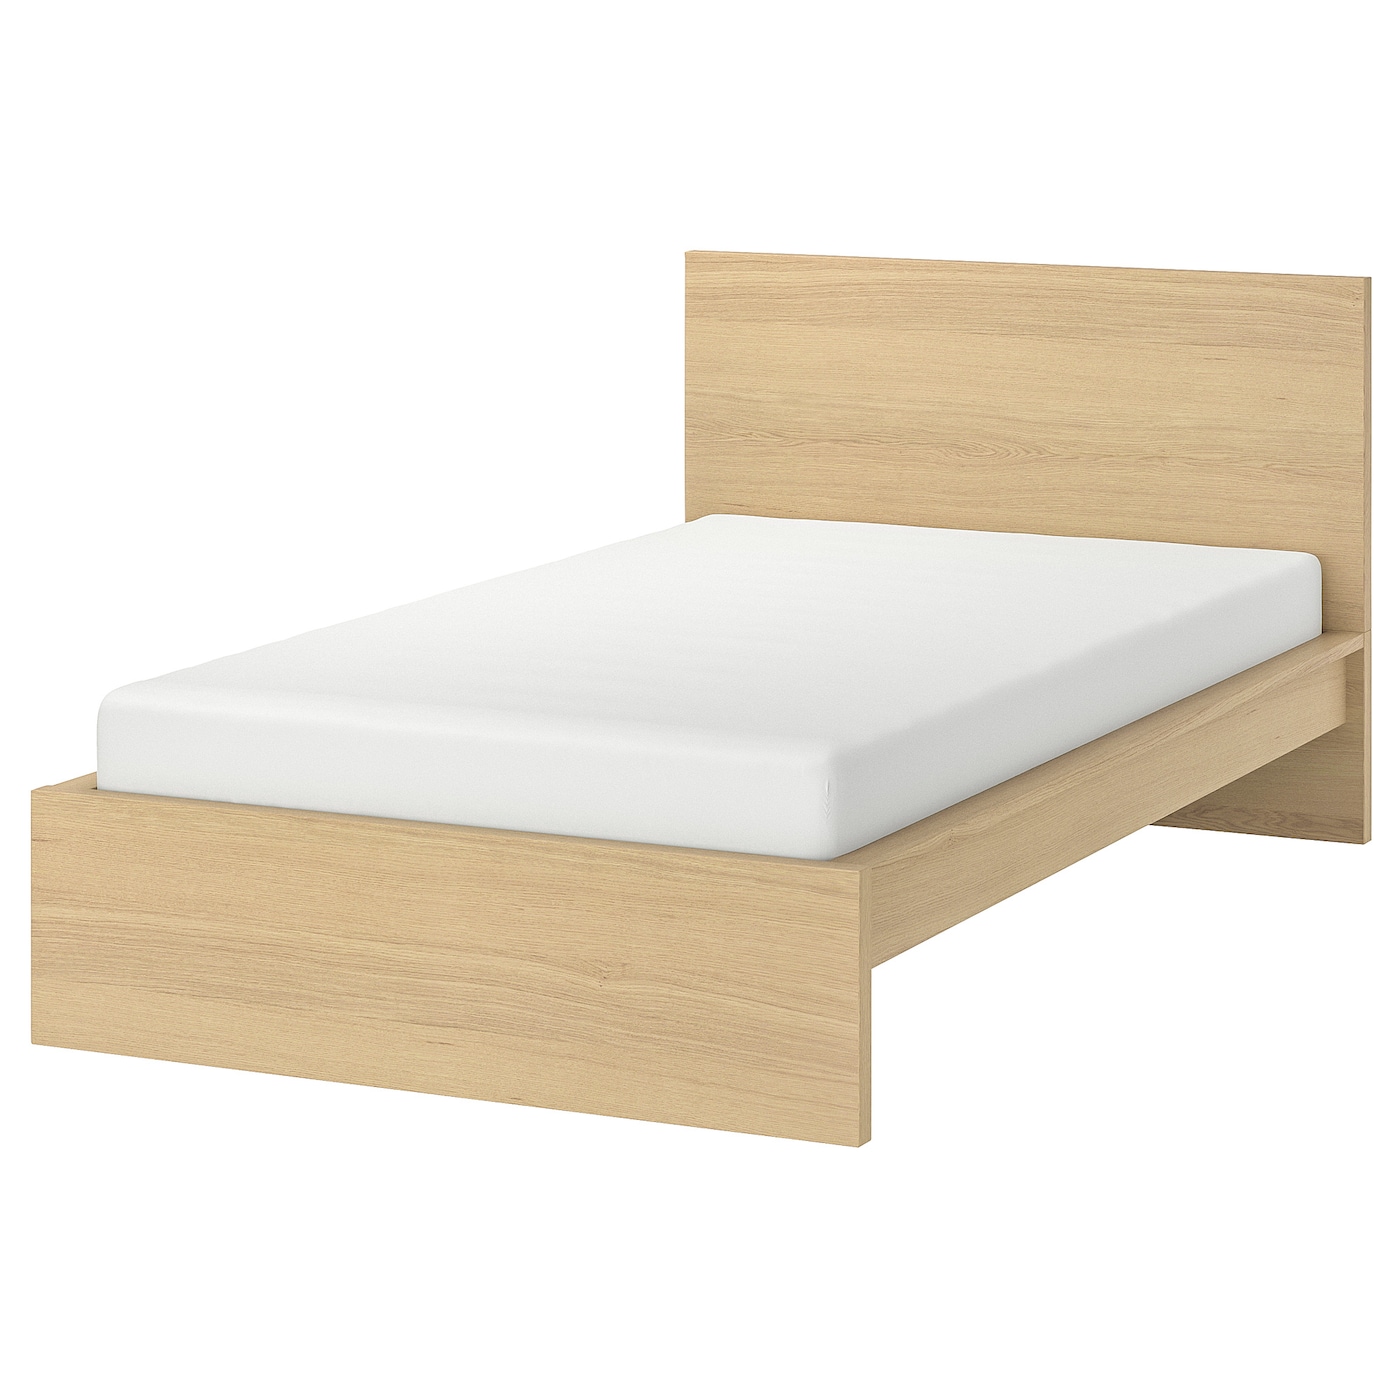 Каркас кровати - IKEA MALM, 200х120 см, бежевый, МАЛЬМ ИКЕА